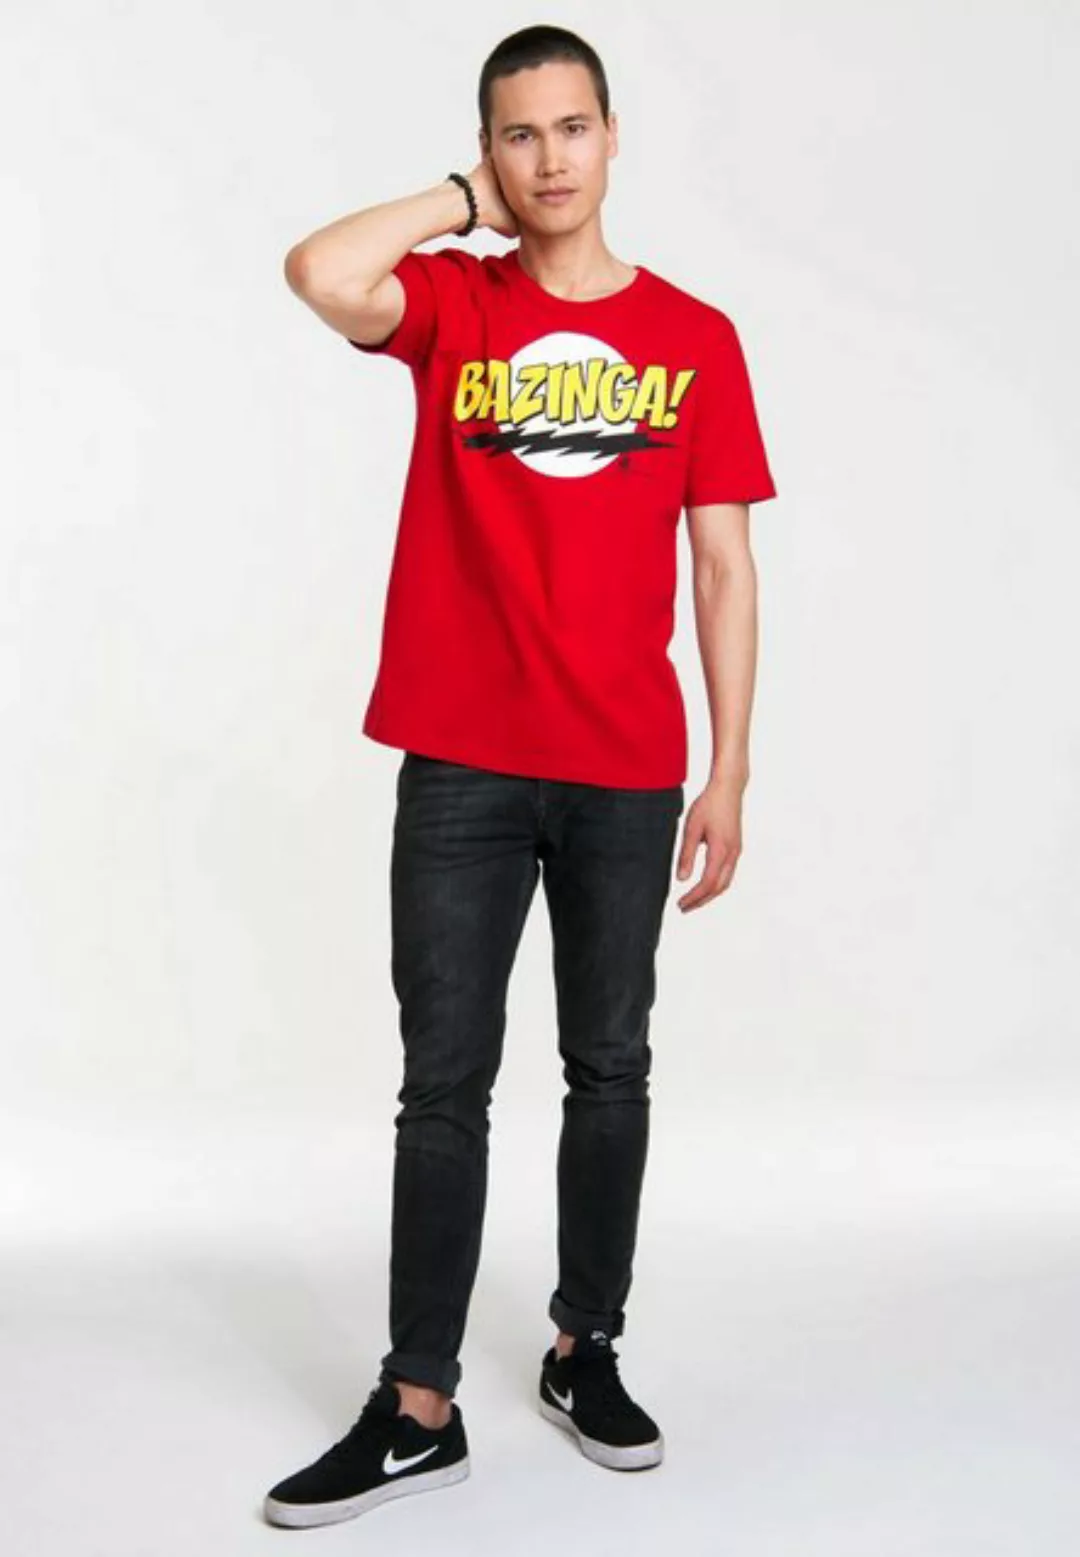 LOGOSHIRT T-Shirt "Bazinga - The Big Bang Theory", mit coolem Frontdruck günstig online kaufen